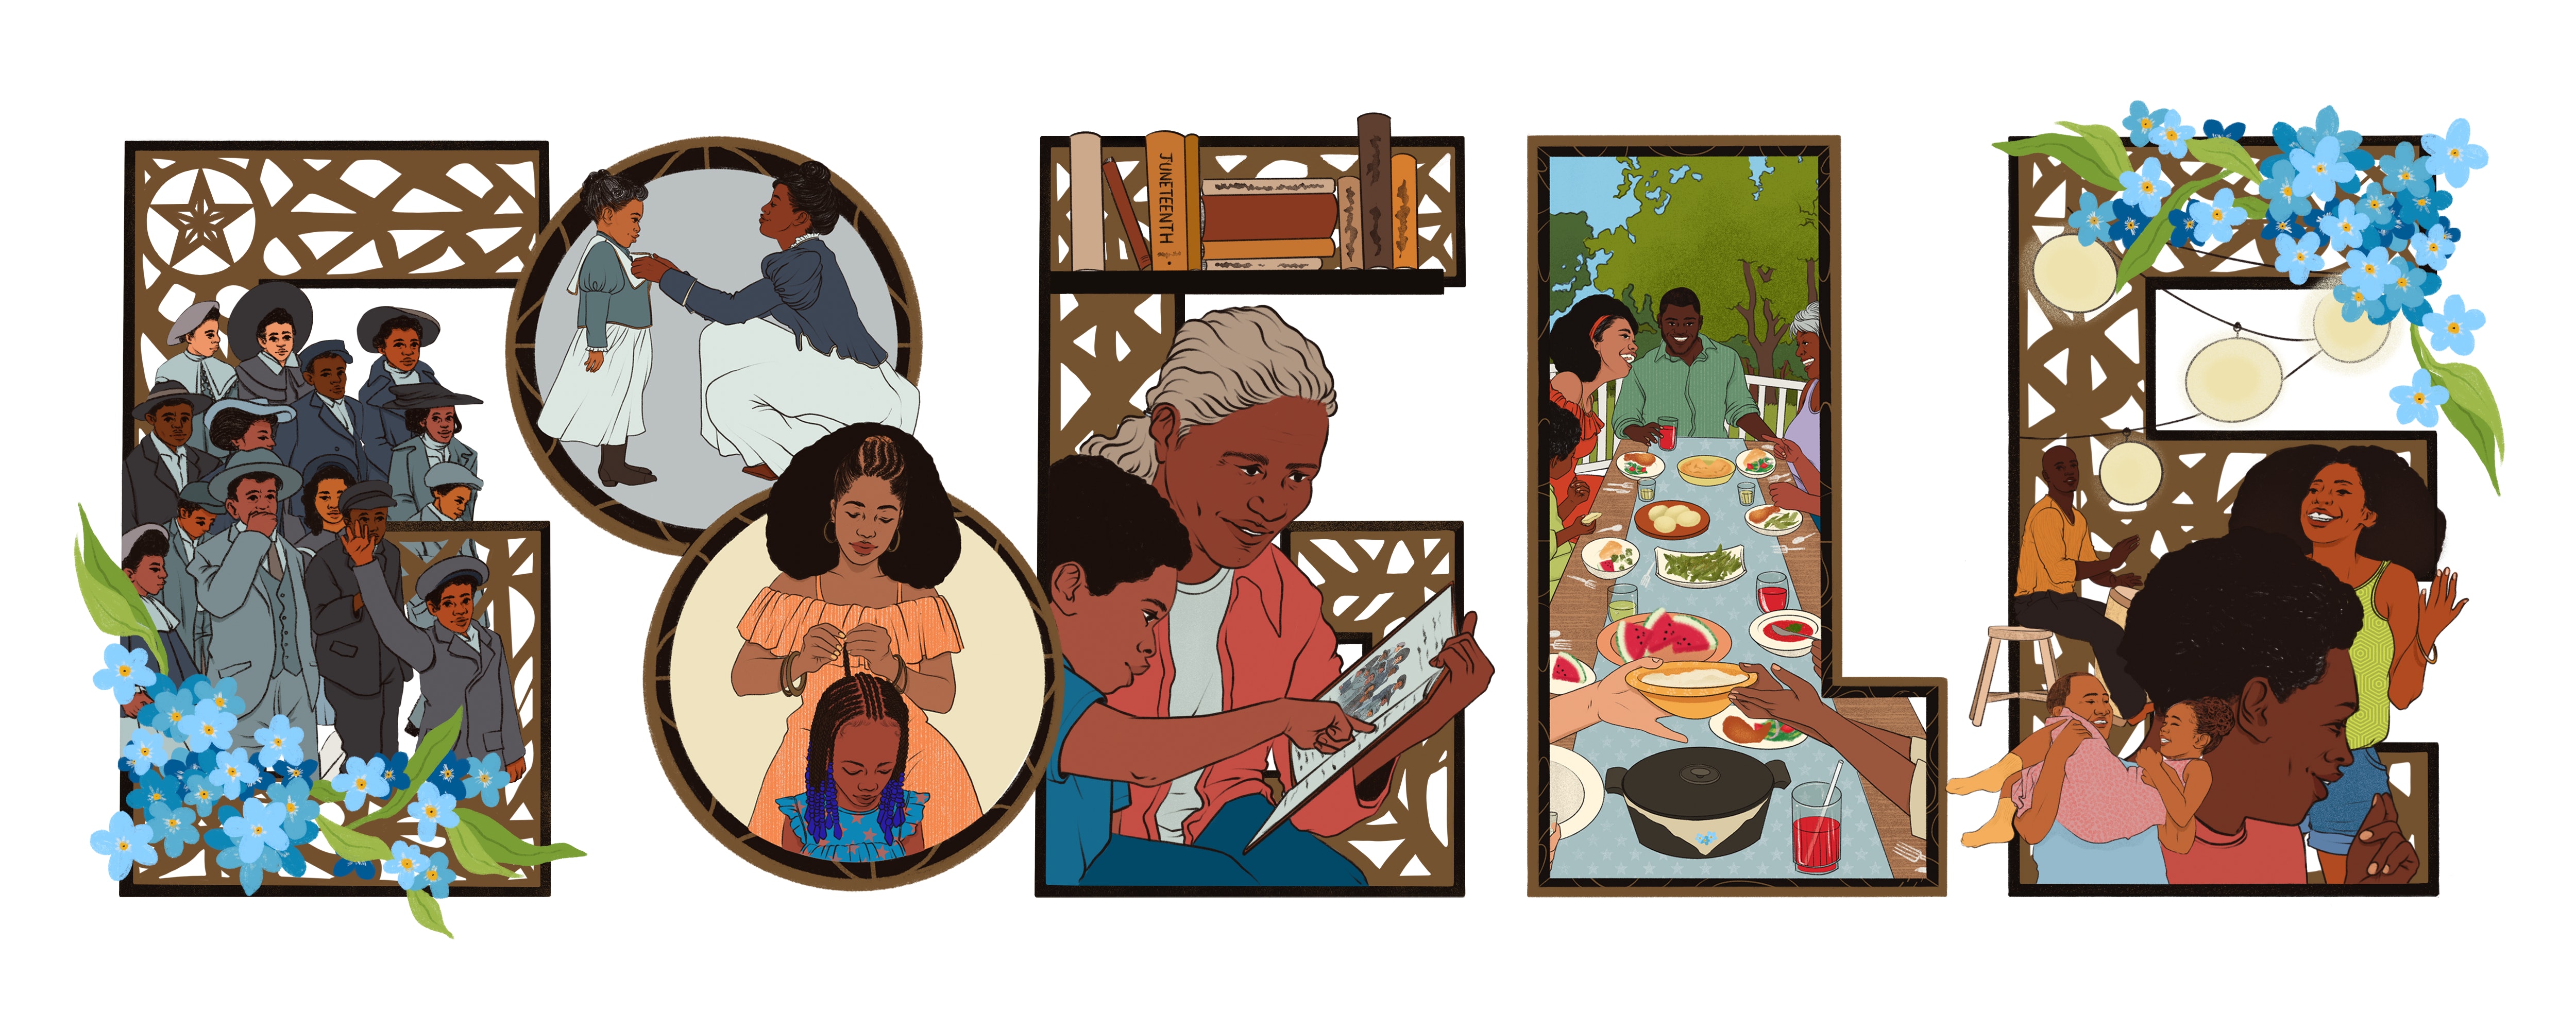 Møt Art Director bak årets Juneteenth Google Doodle